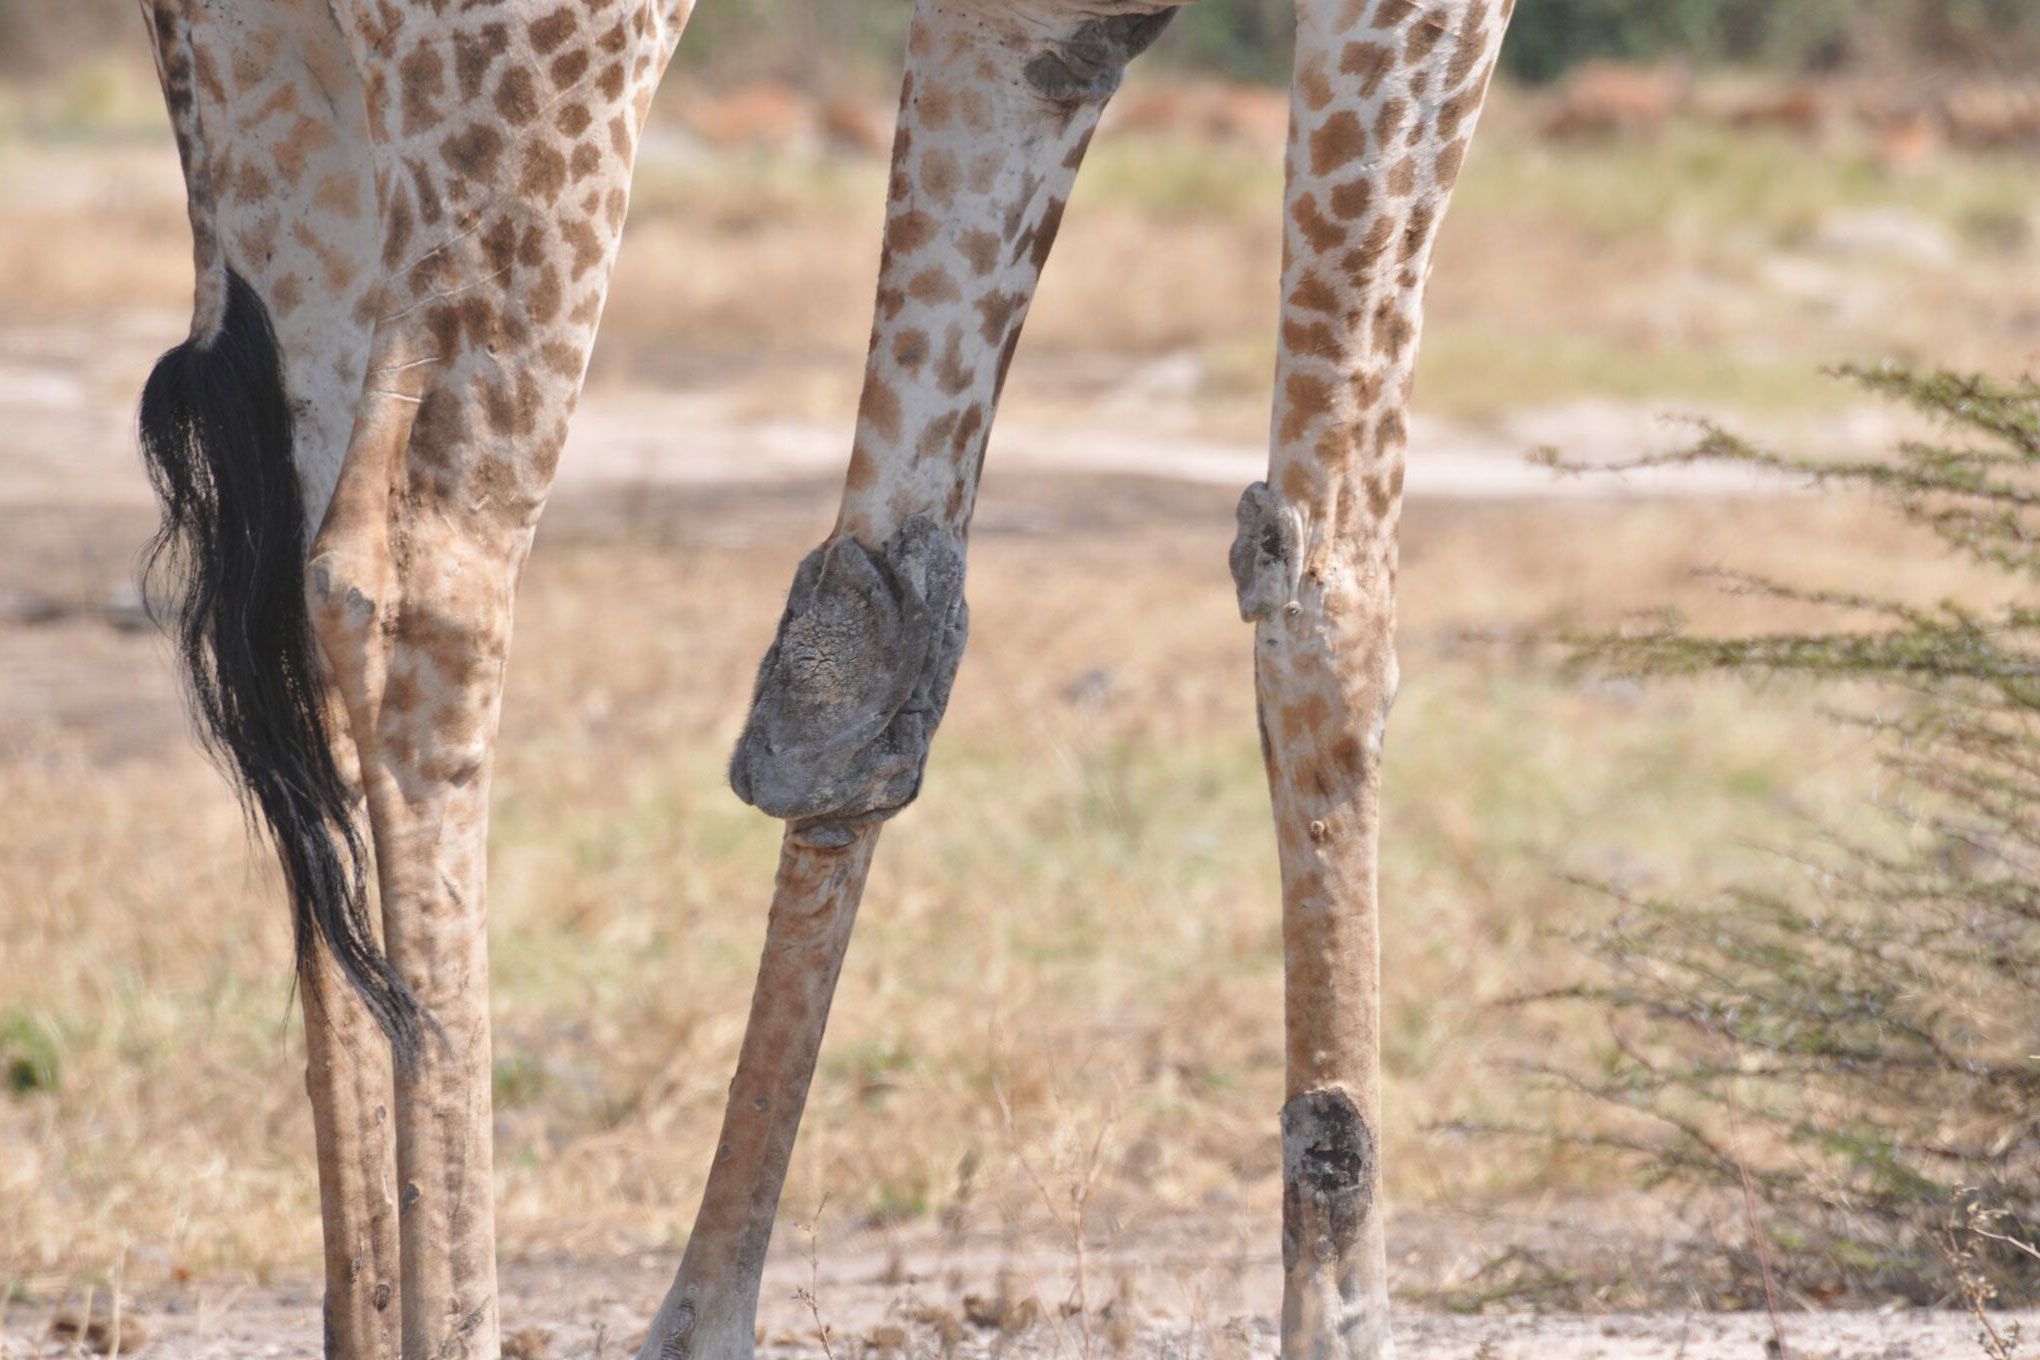 Mysterious Giraffe Disease Has Scientists Baffled